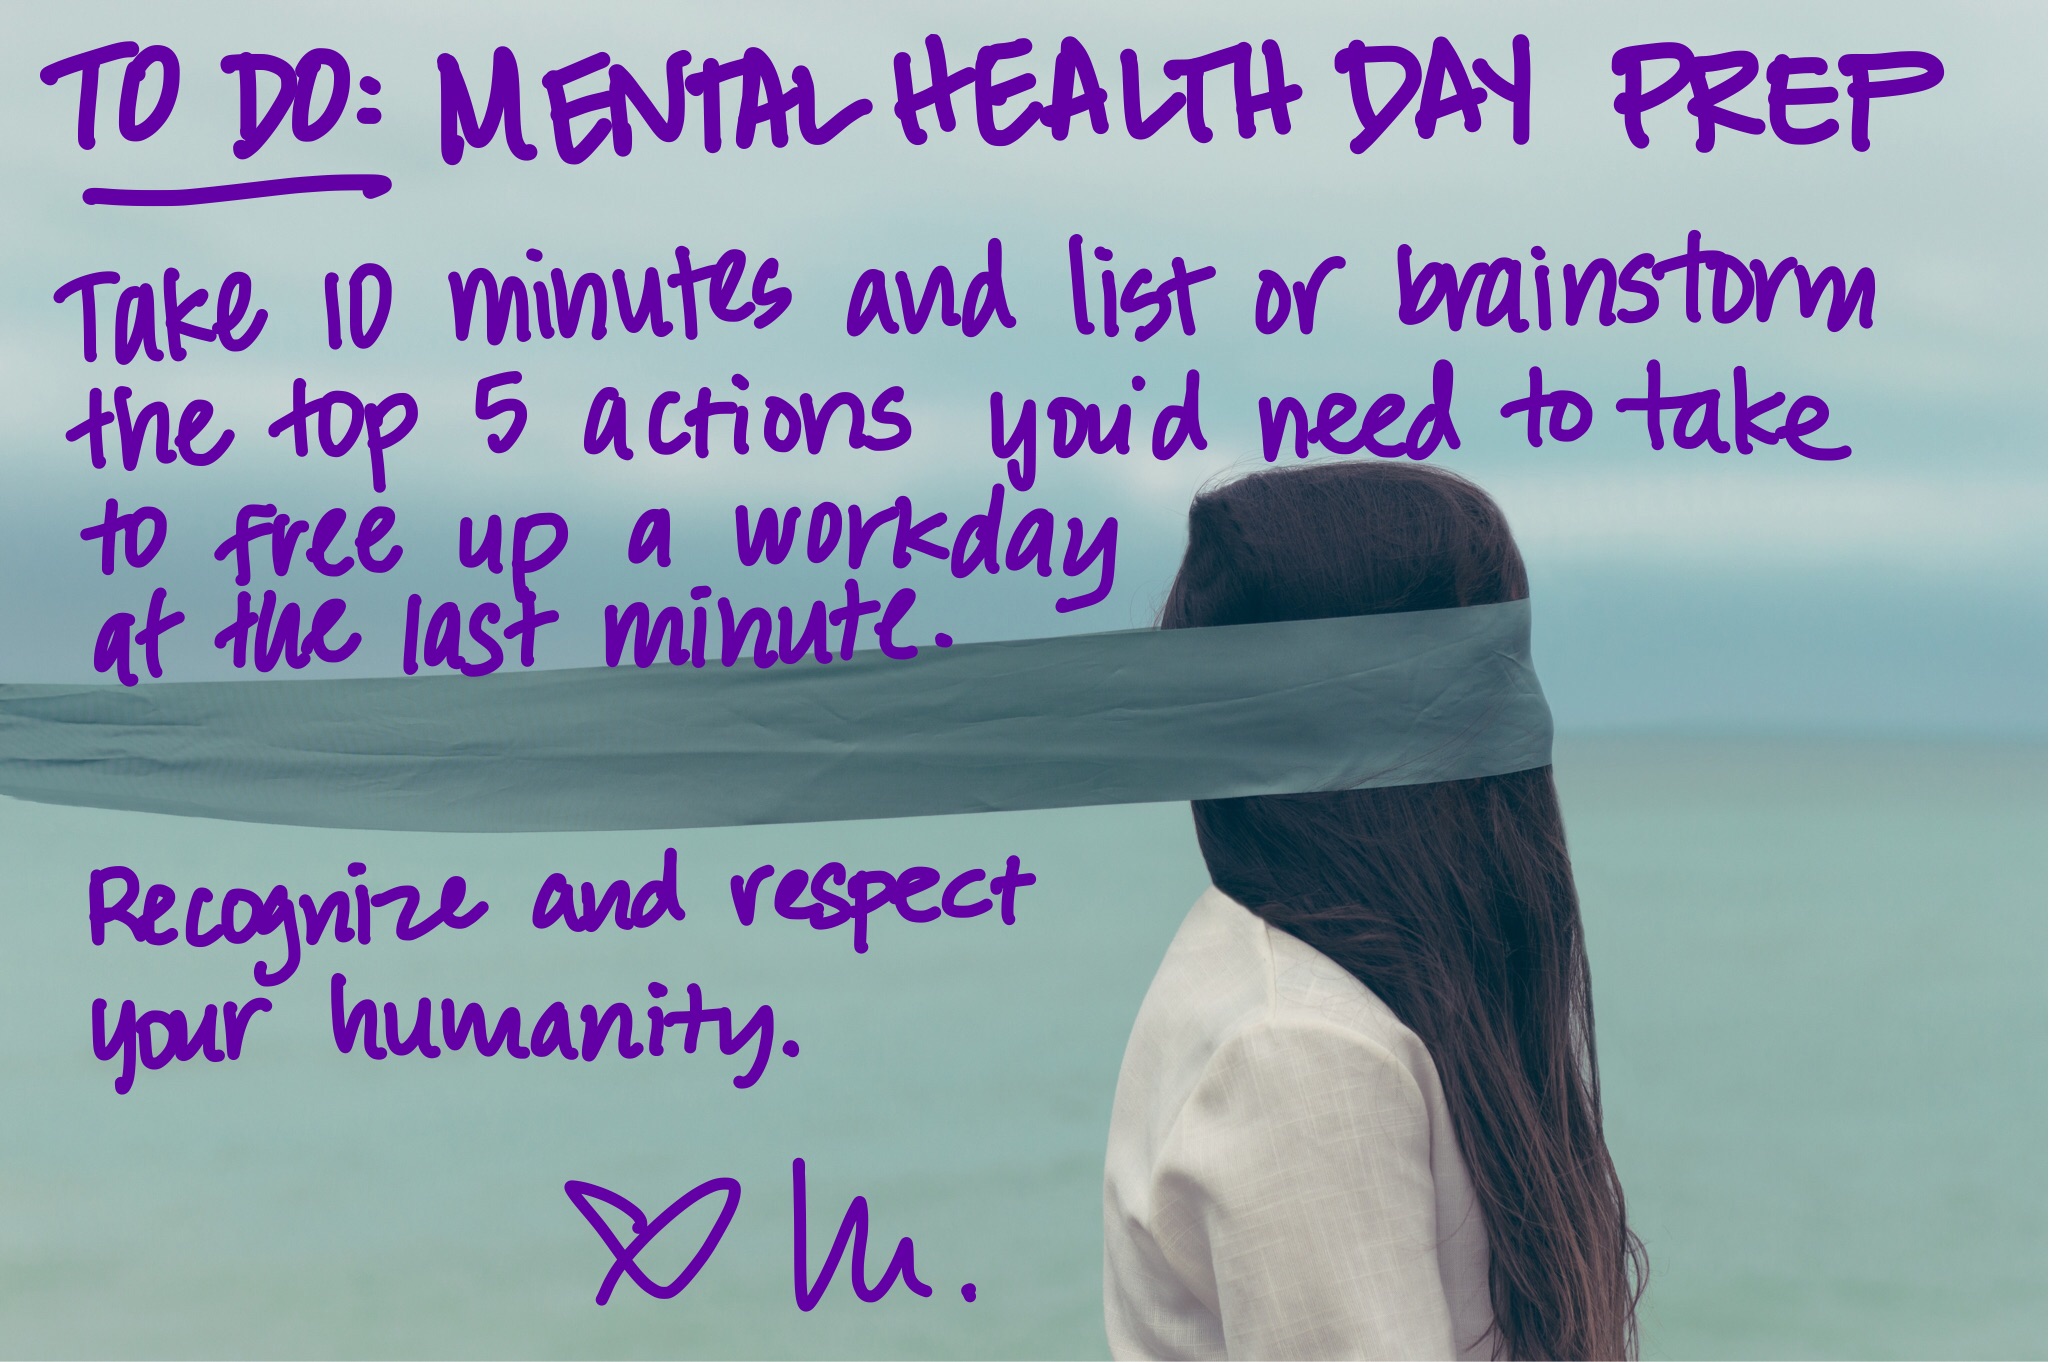 mental health day prep.png